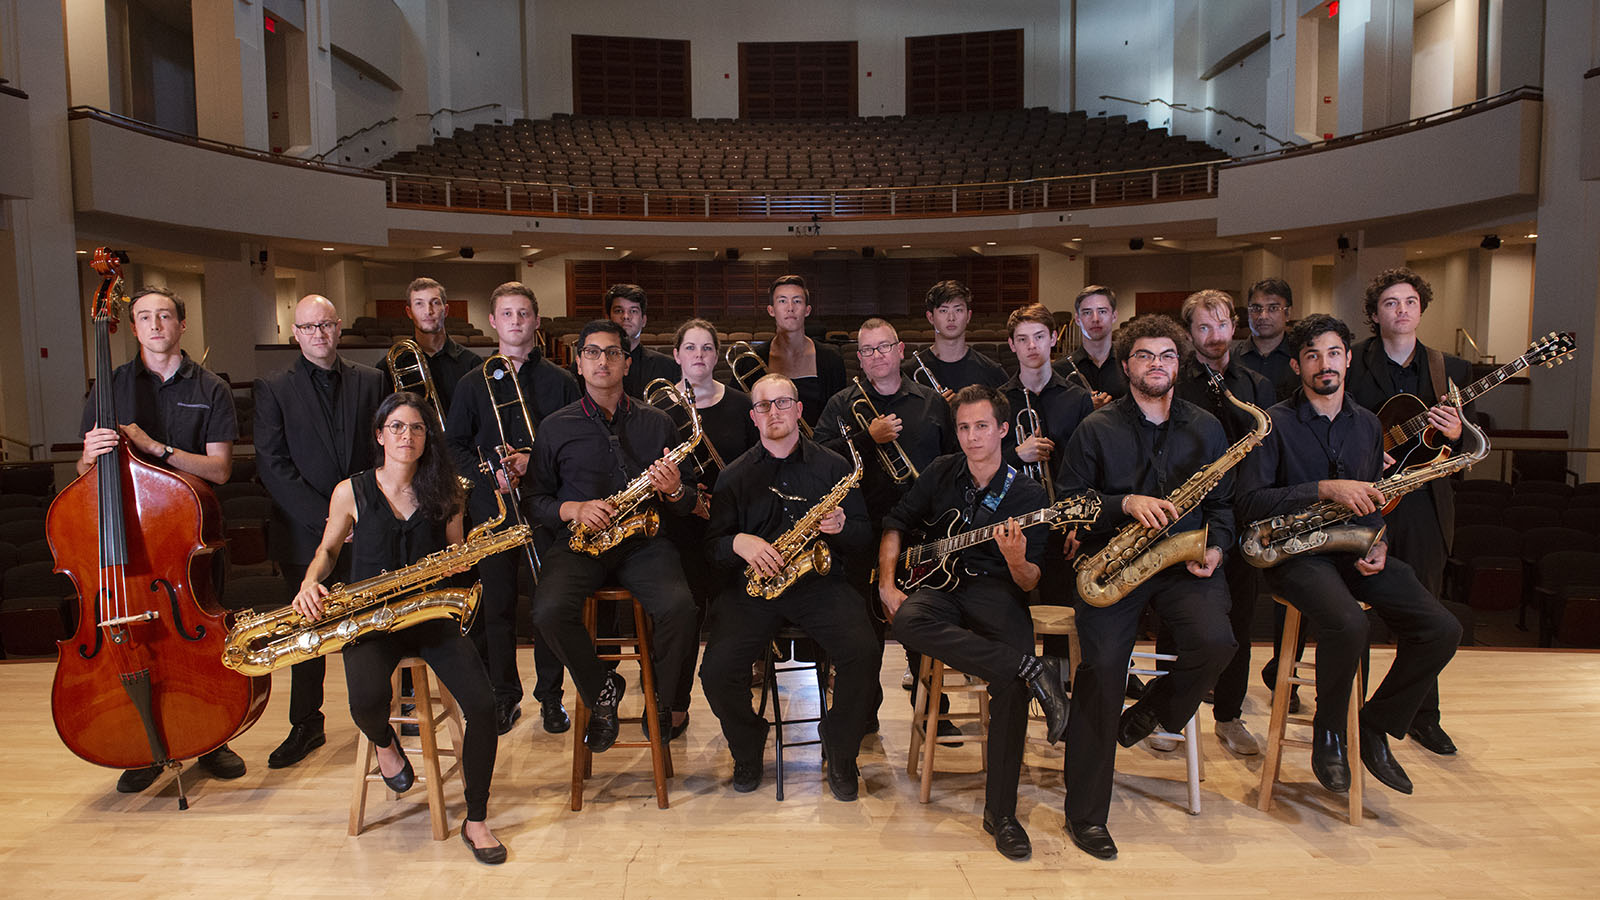 Members of the UMD jazz ensemble programs.